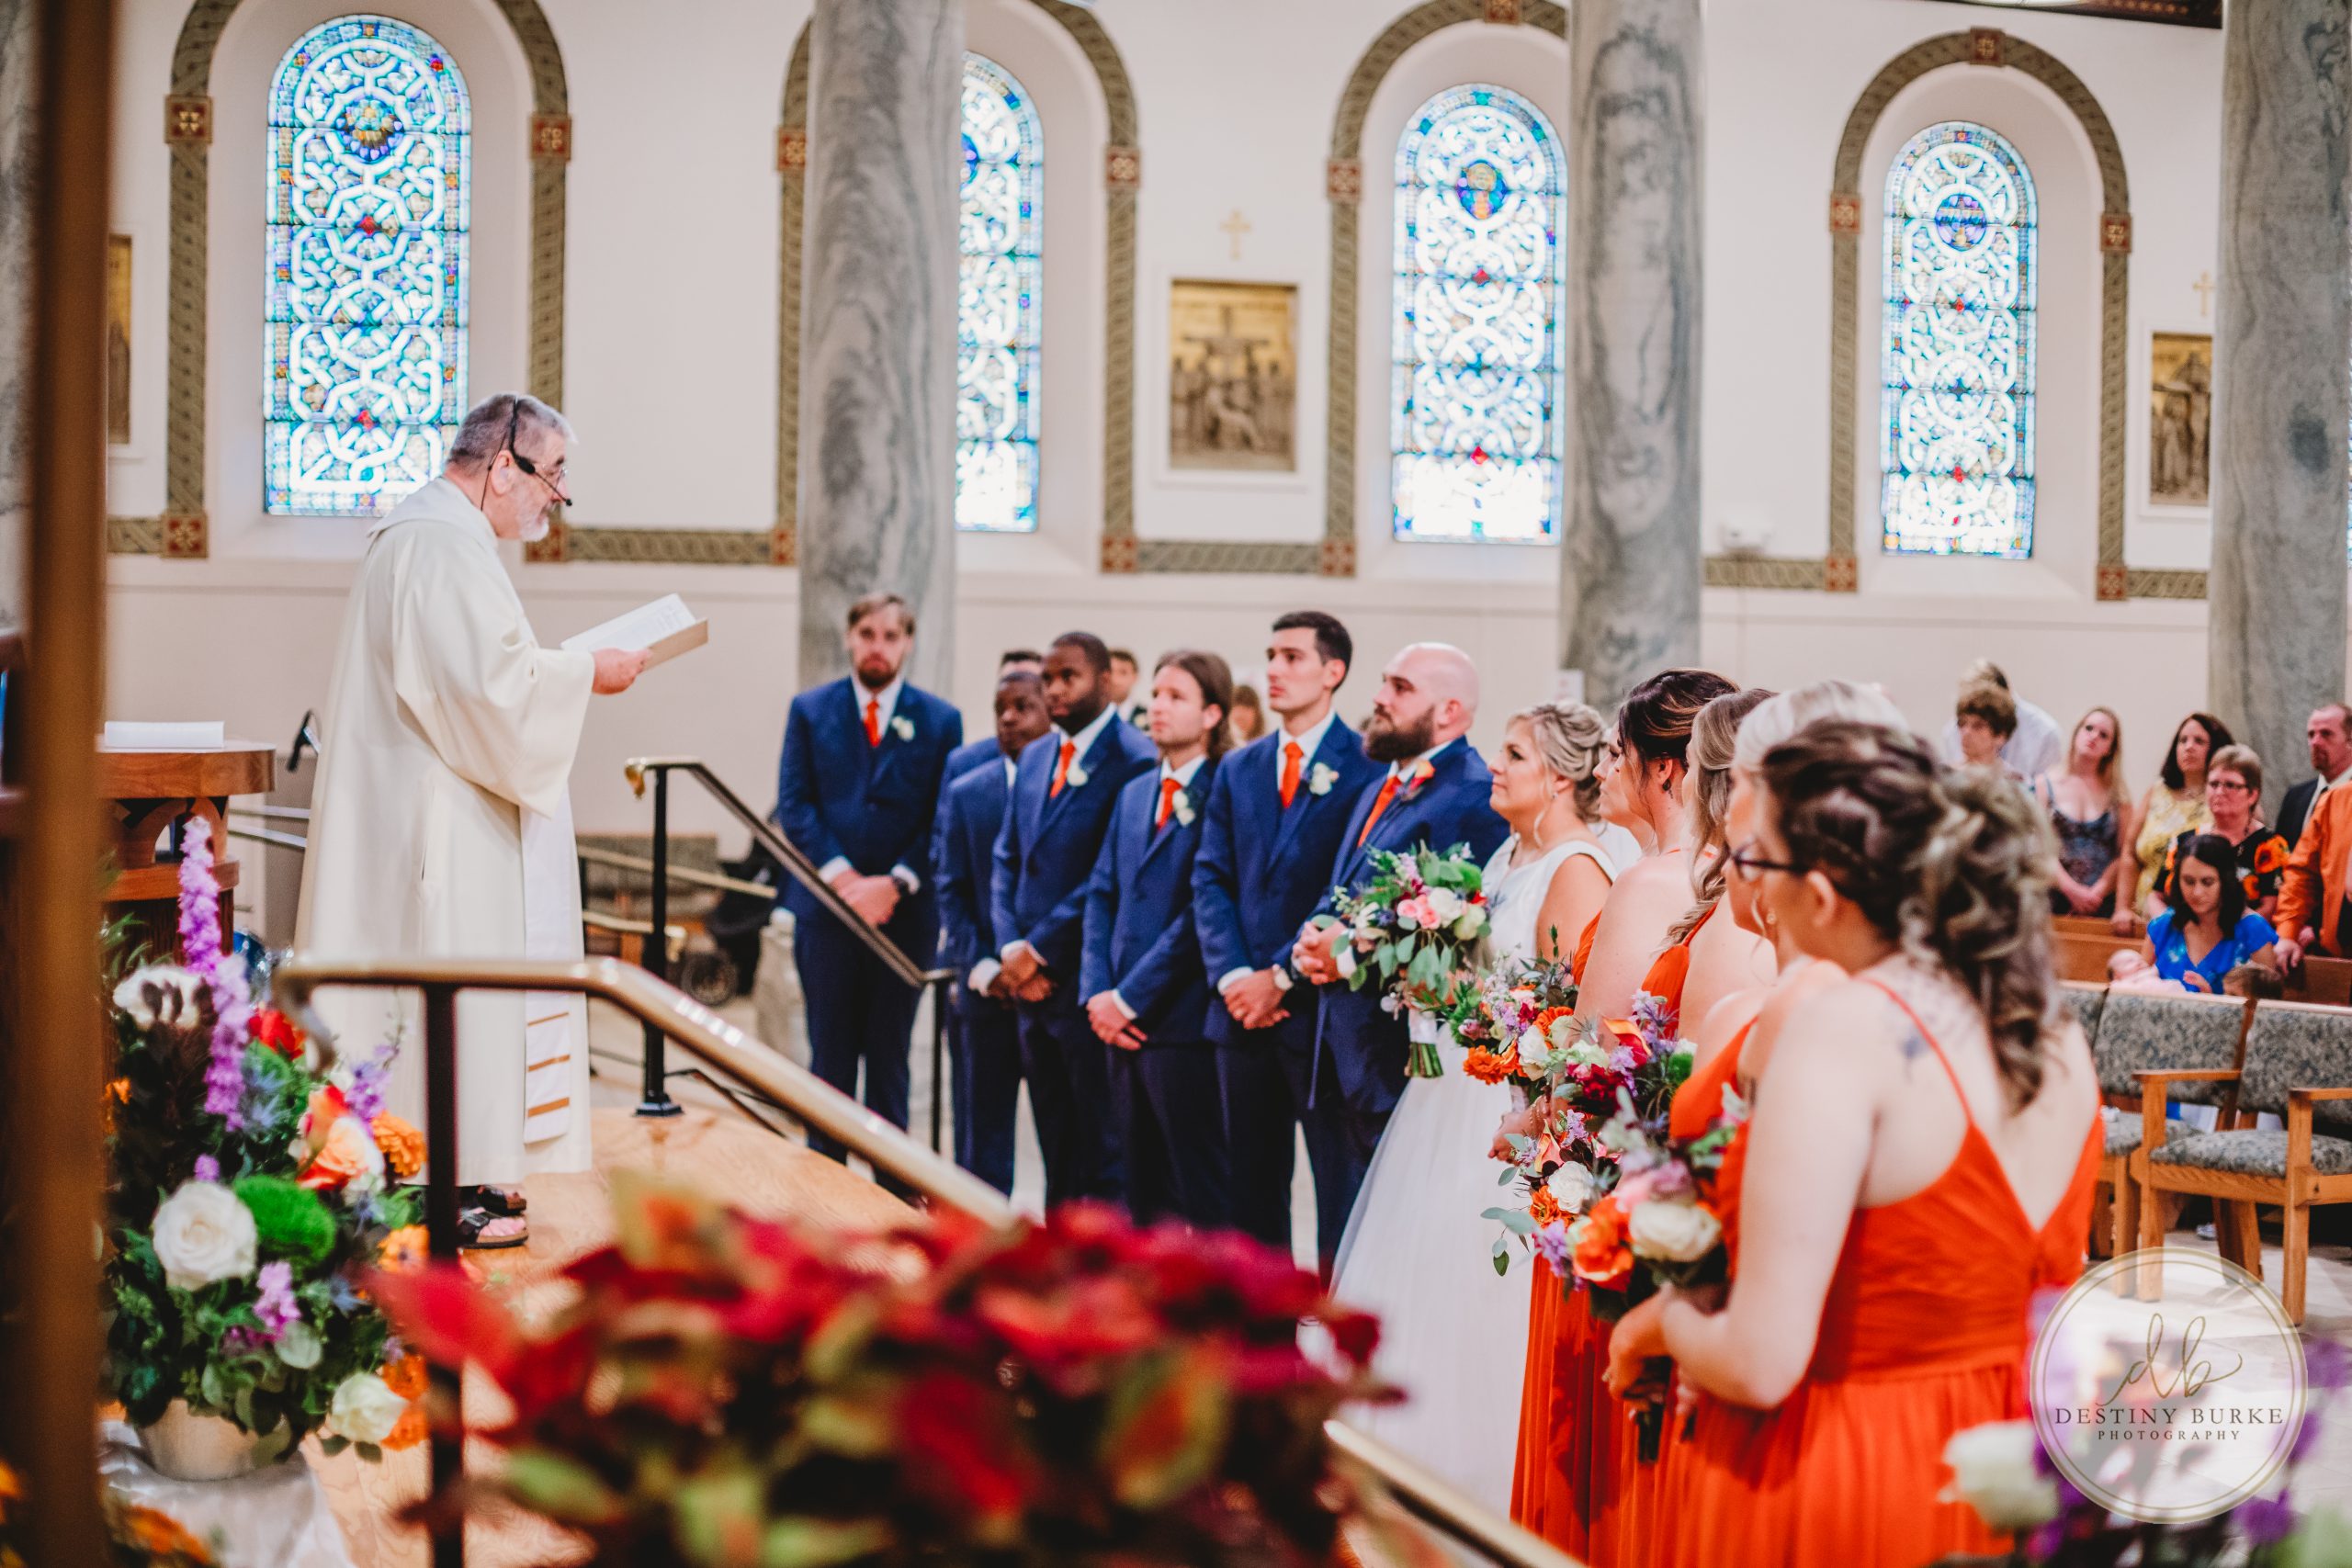 St Monica, Church, Rochester, upstate, ny, roc, wedding, kiss, bride, groom